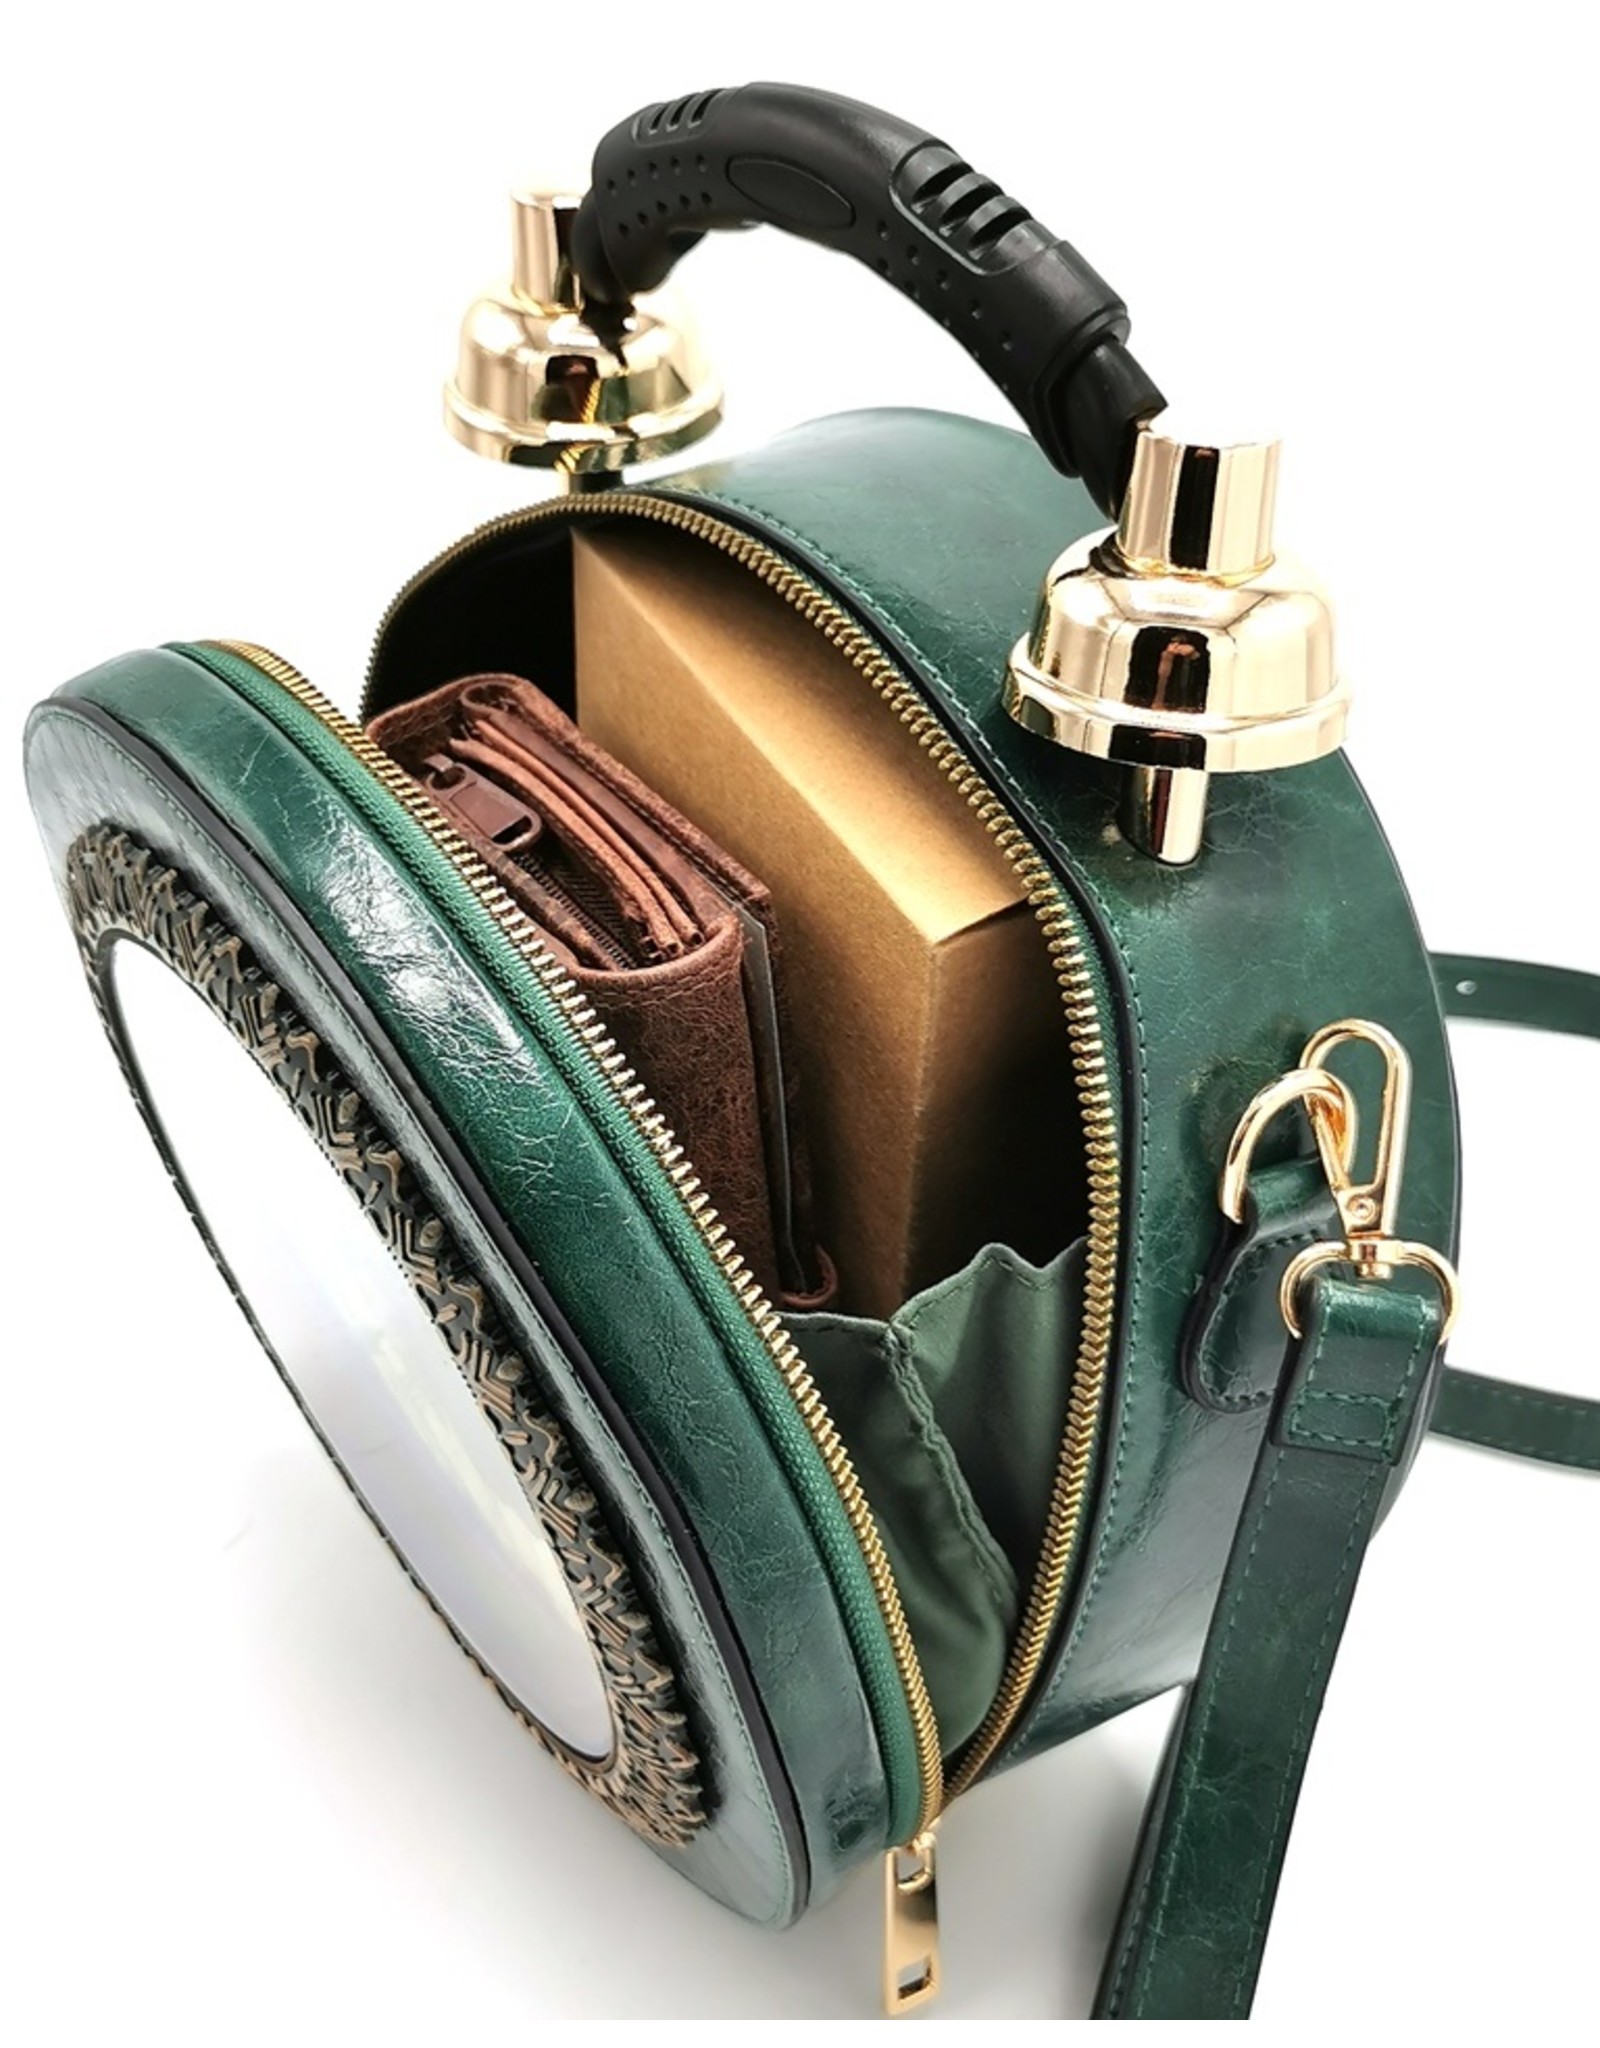 Magic Bags Steampunk bags Gothic bags - Clock Handbag with Real Clock green (medium)